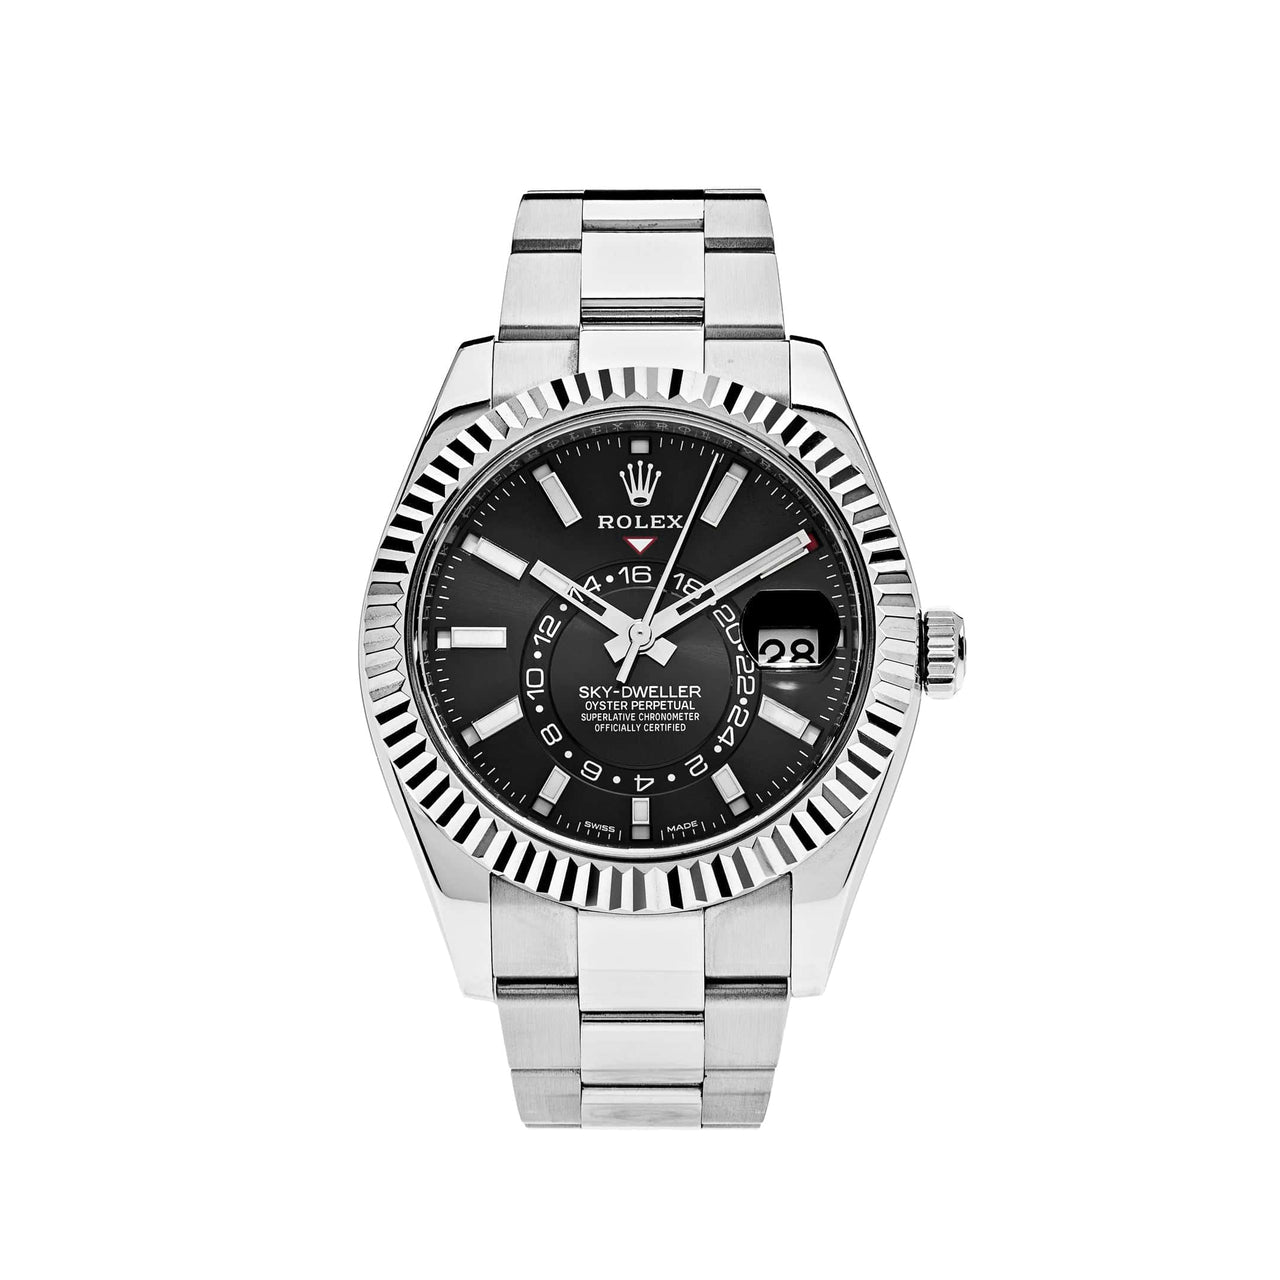 Luxury Watch Rolex Sky-Dweller Stainless Steel Black Dial Oyster Bracelet 326934 Wrist Aficionado